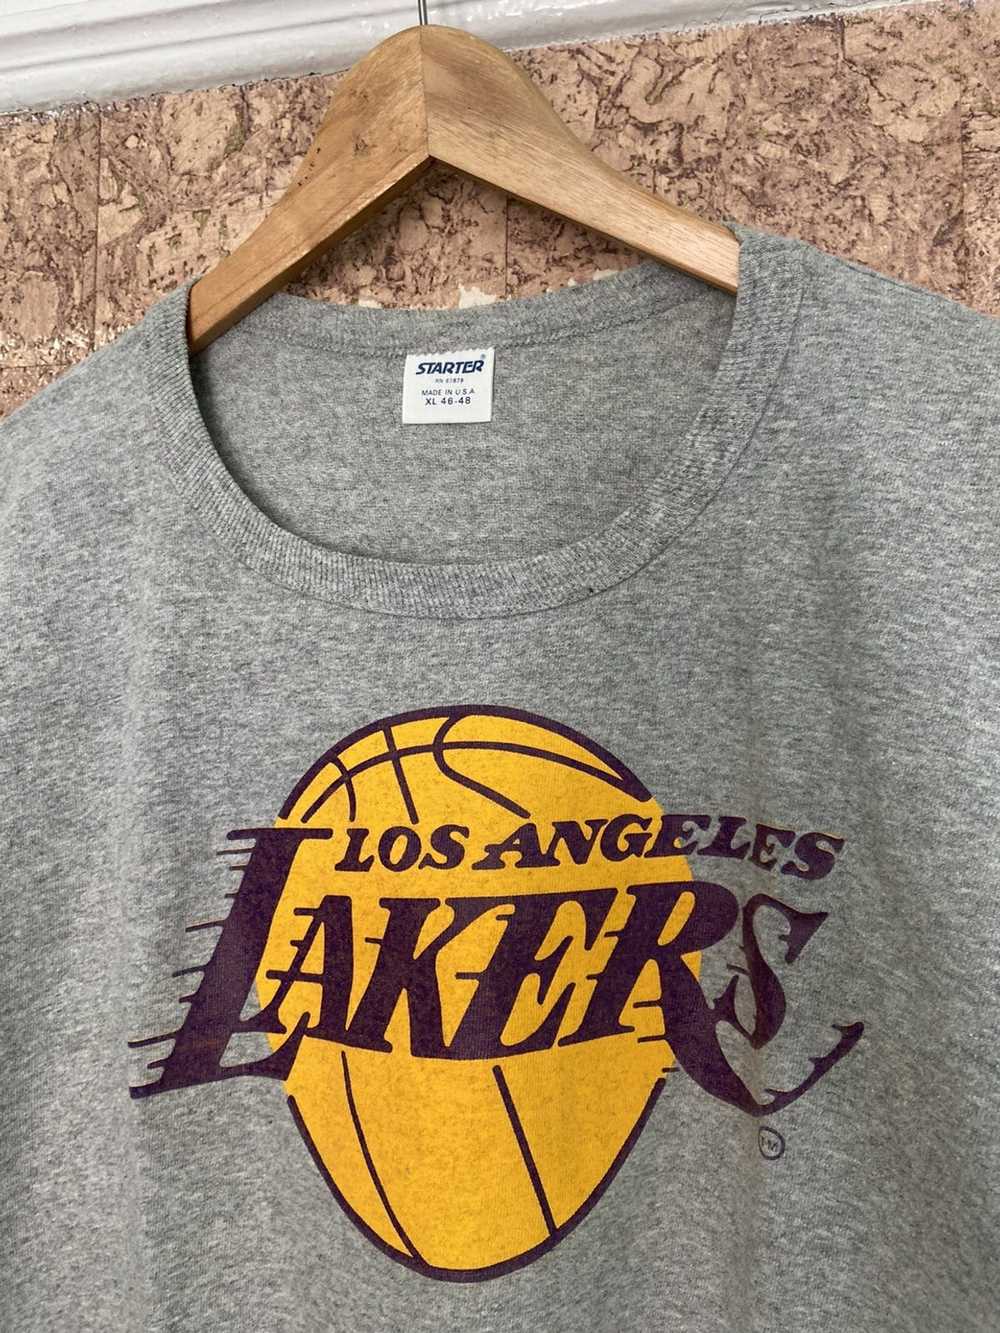 L.A. Lakers × Starter L A Lakers starter t shirts - image 4